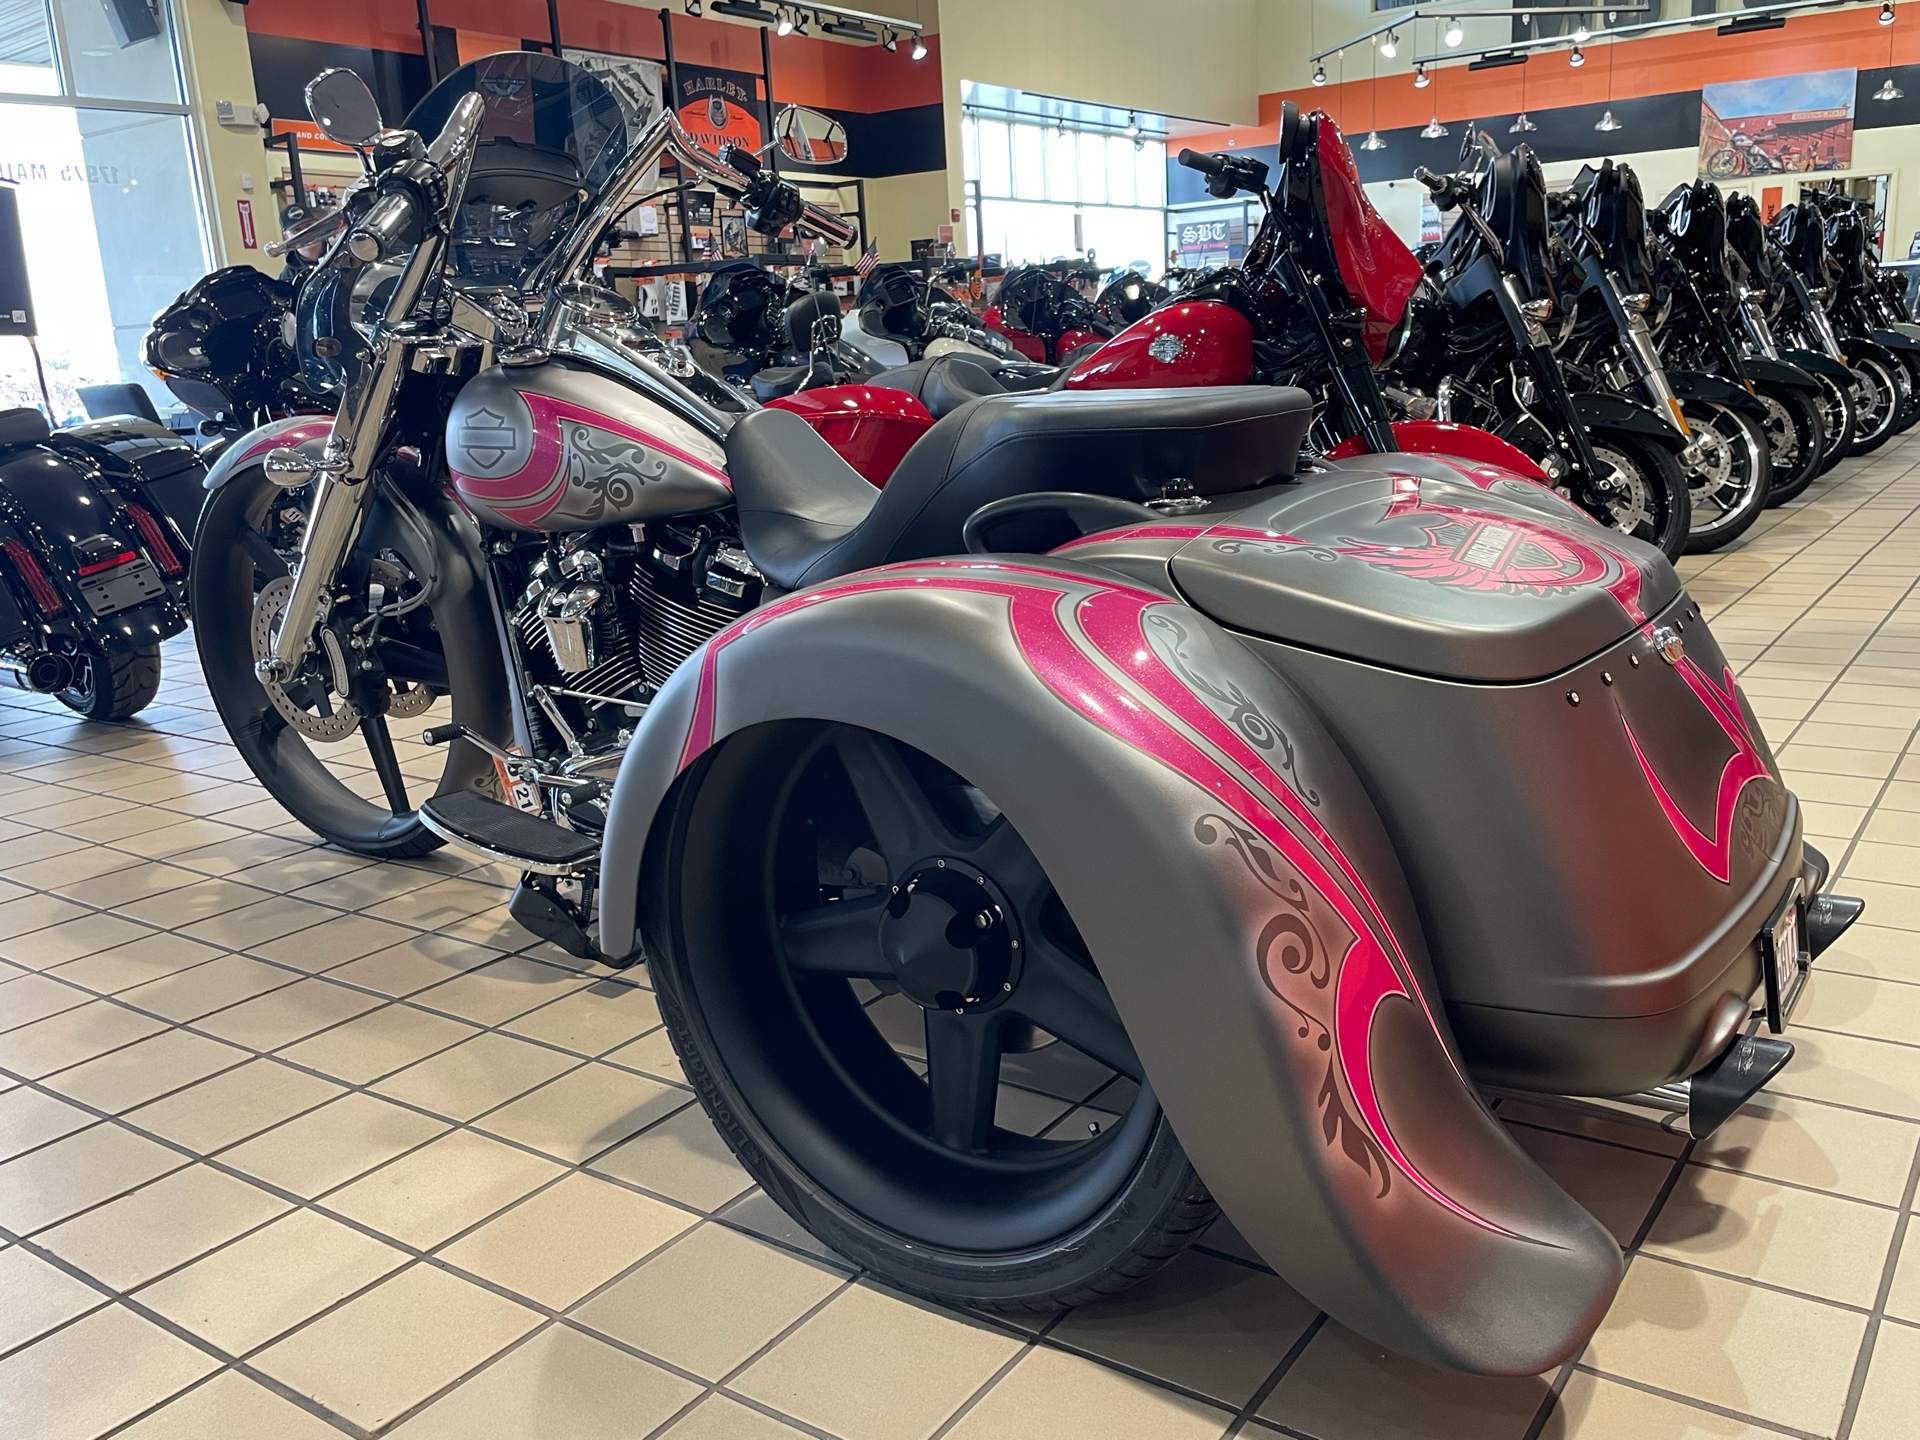 2018 Harley-Davidson Freewheeler® in Dumfries, Virginia - Photo 24